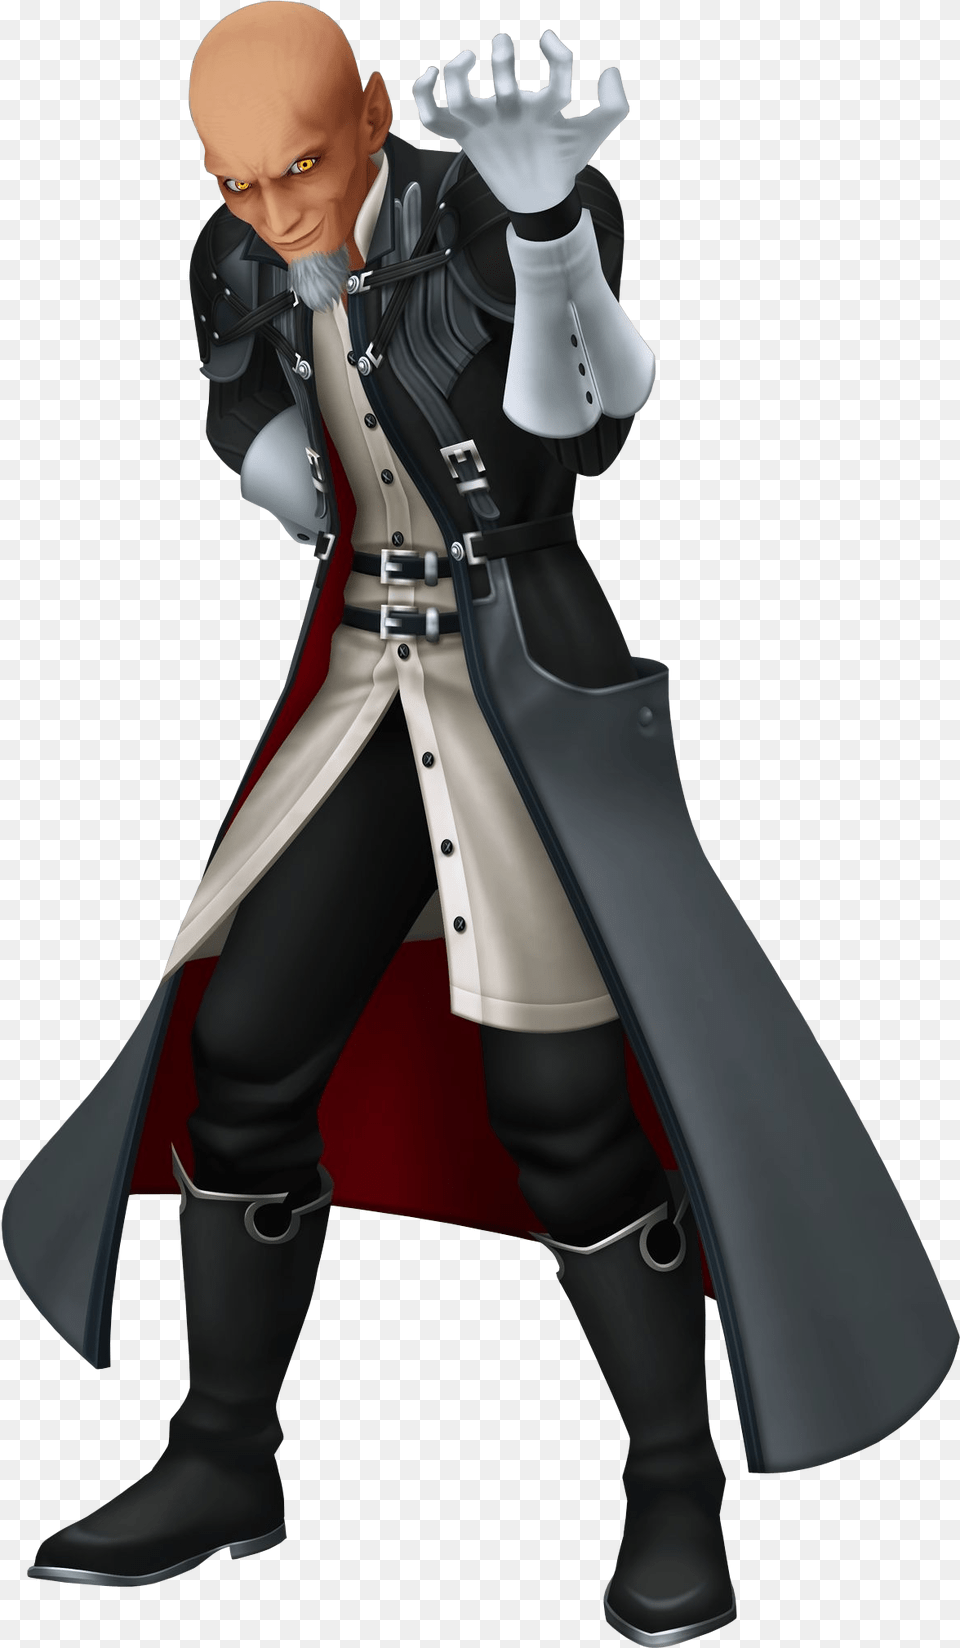 Characters Of Kingdom Hearts U0026 Bad Guy In Kingdom Hearts, Clothing, Glove, Blade, Dagger Free Png